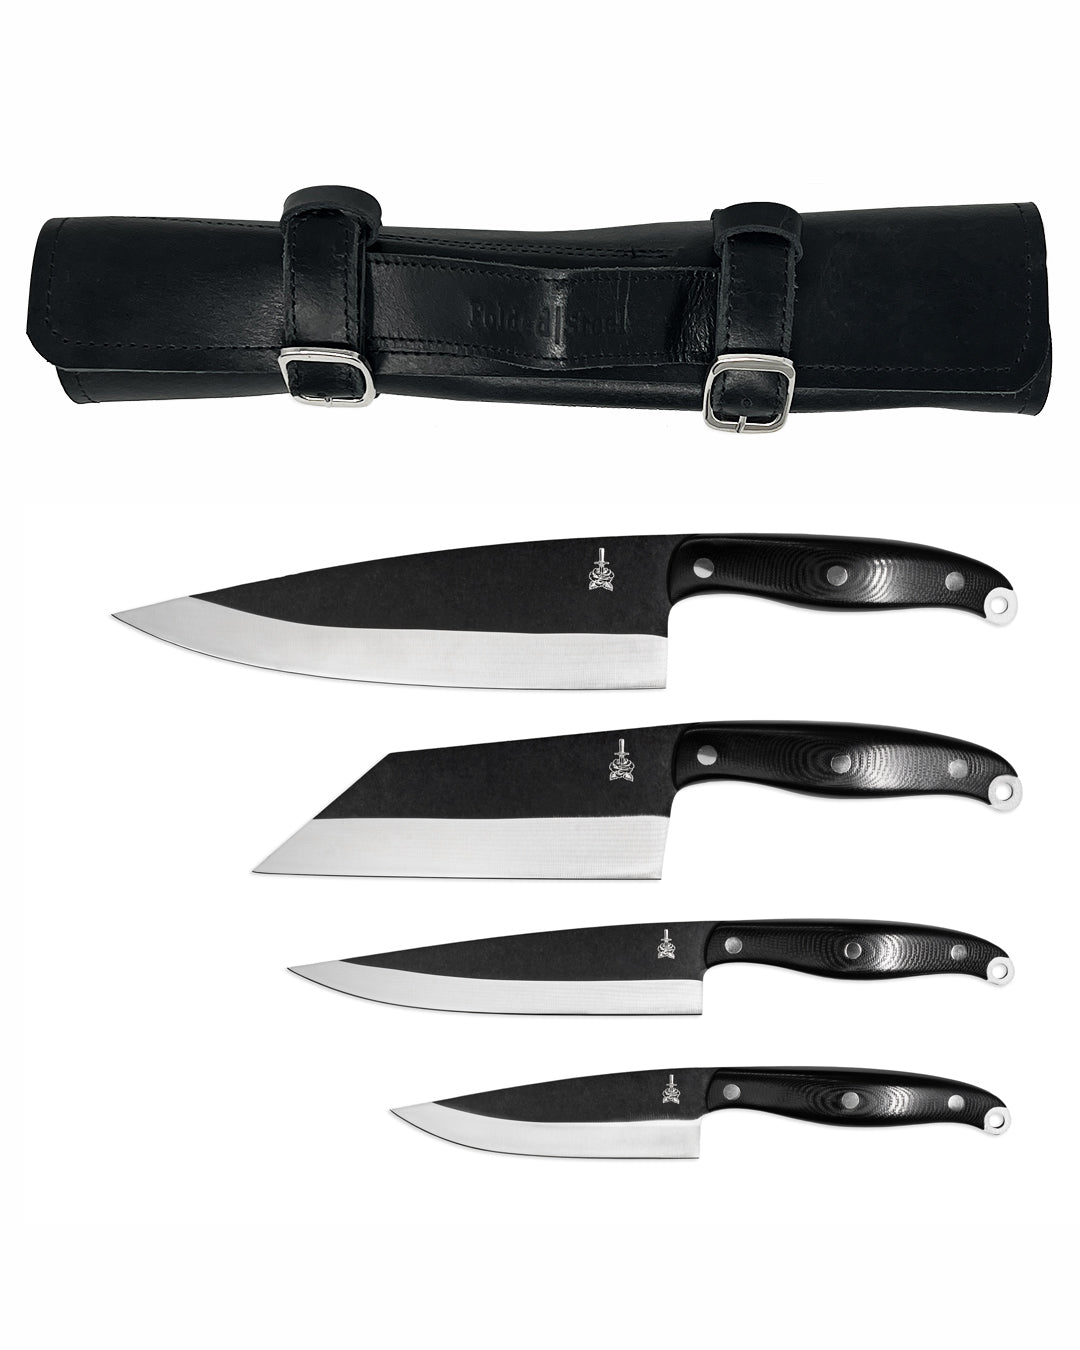 Mainstays 4-Piece Steak Knife Set with Black Soft Grip Handles